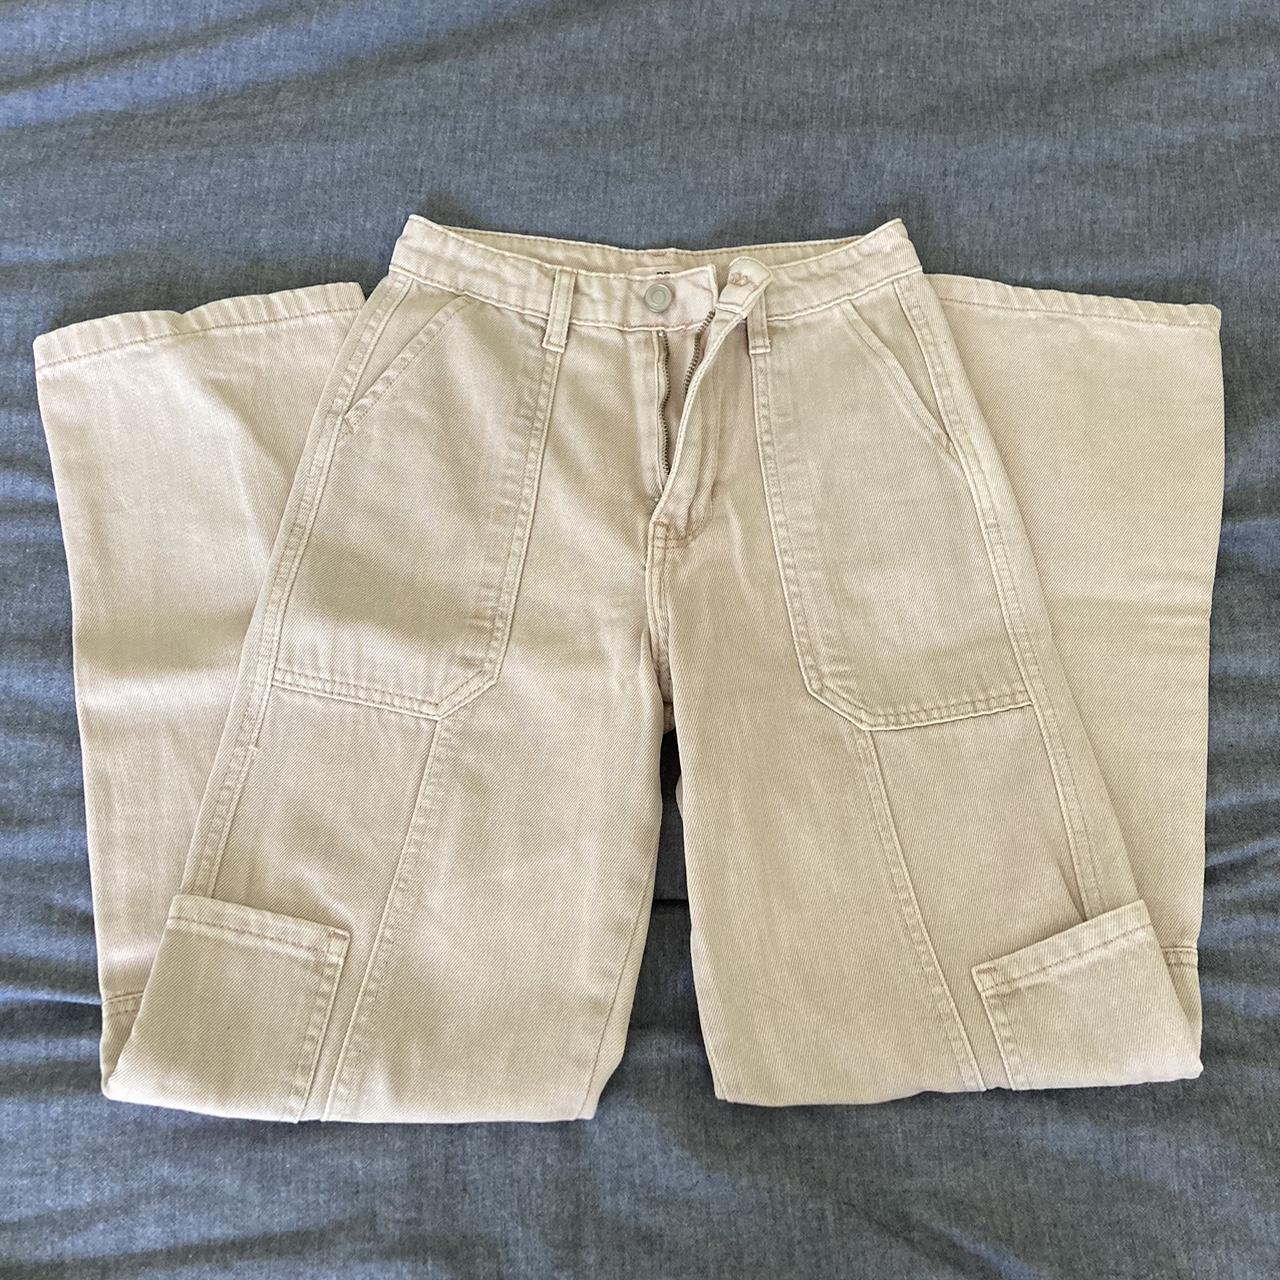 light pink/beige cargo jeans secondary pockets are... - Depop